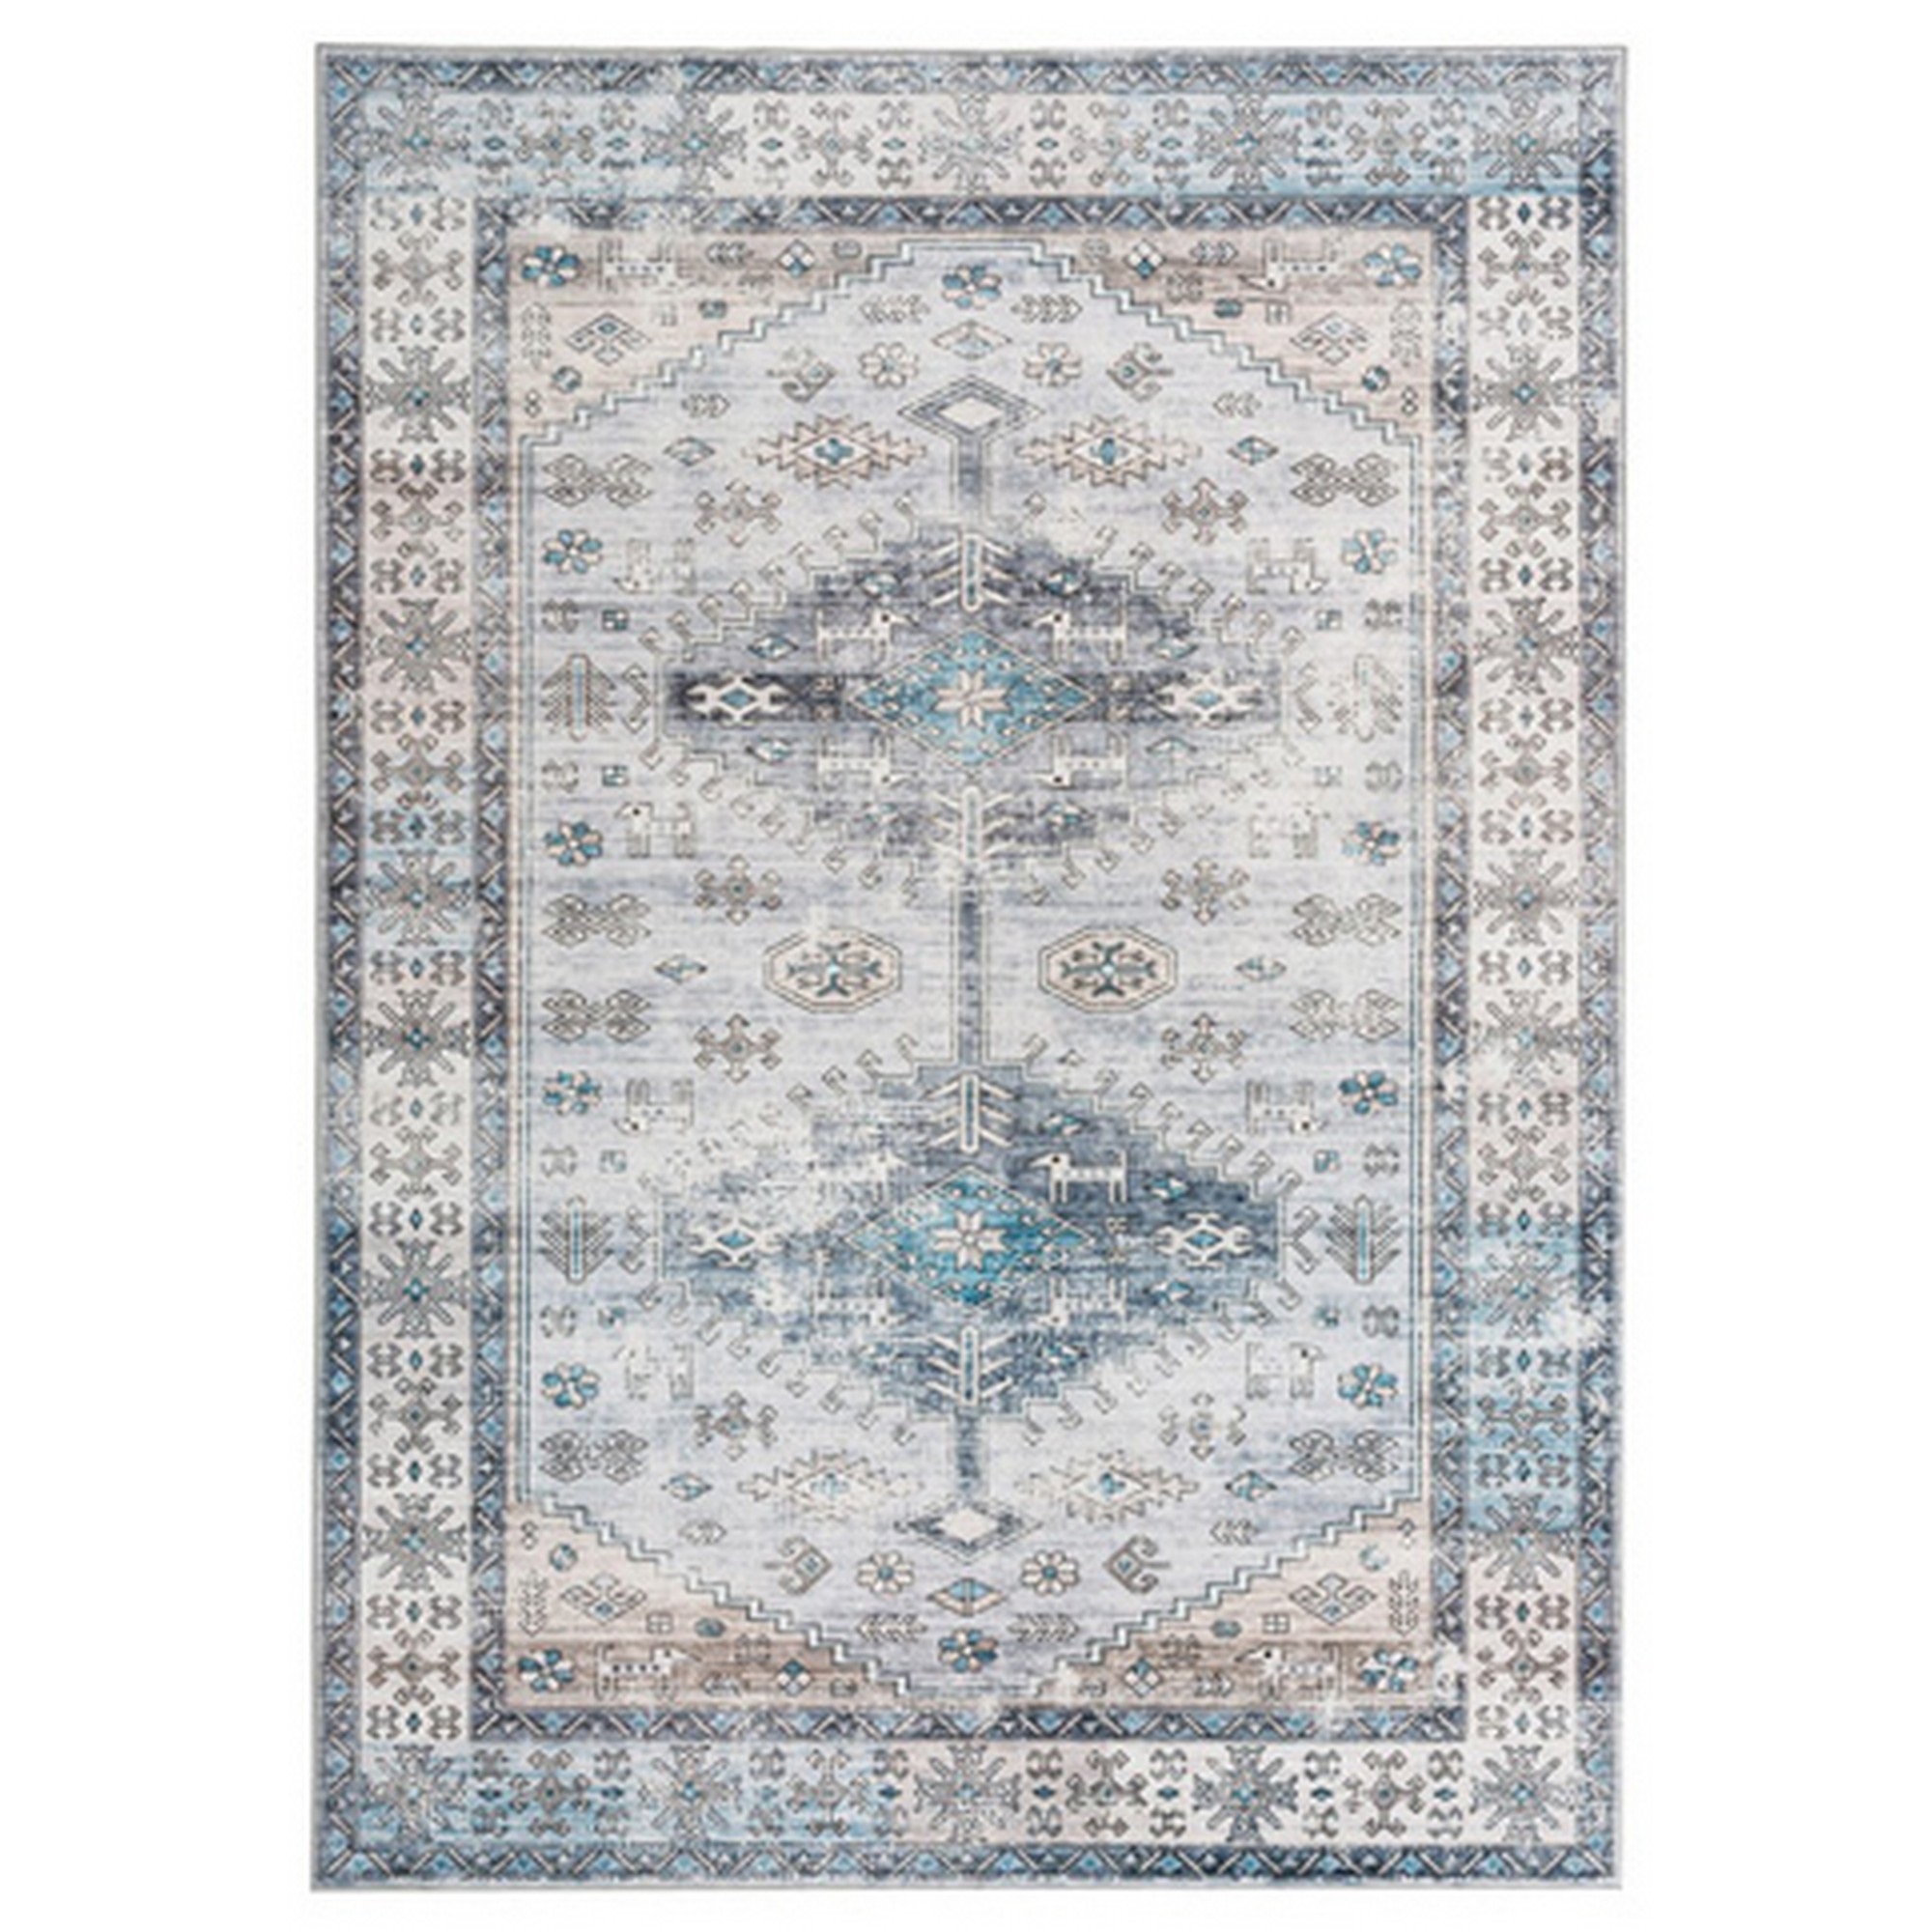 Benjara Nyx 10 x 8 Large Soft Fabric Floor Area Rug, Vintage Blue Border Design